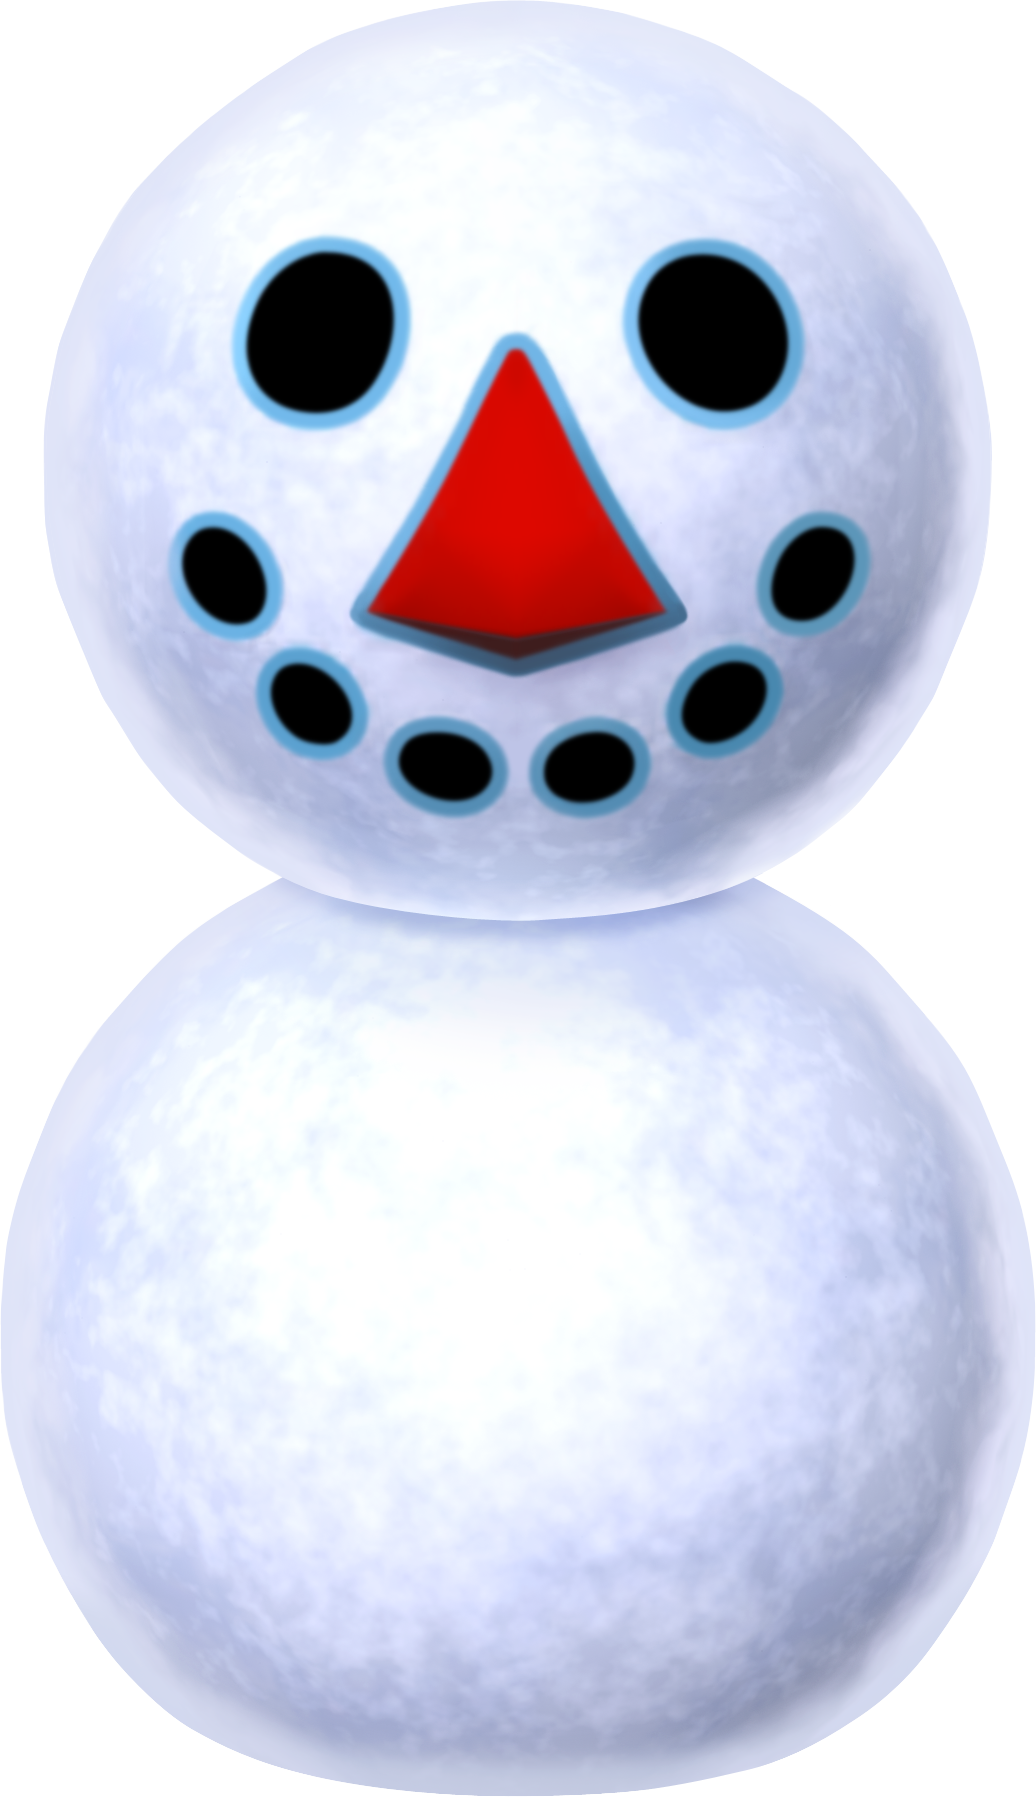 Snowboy NL.png